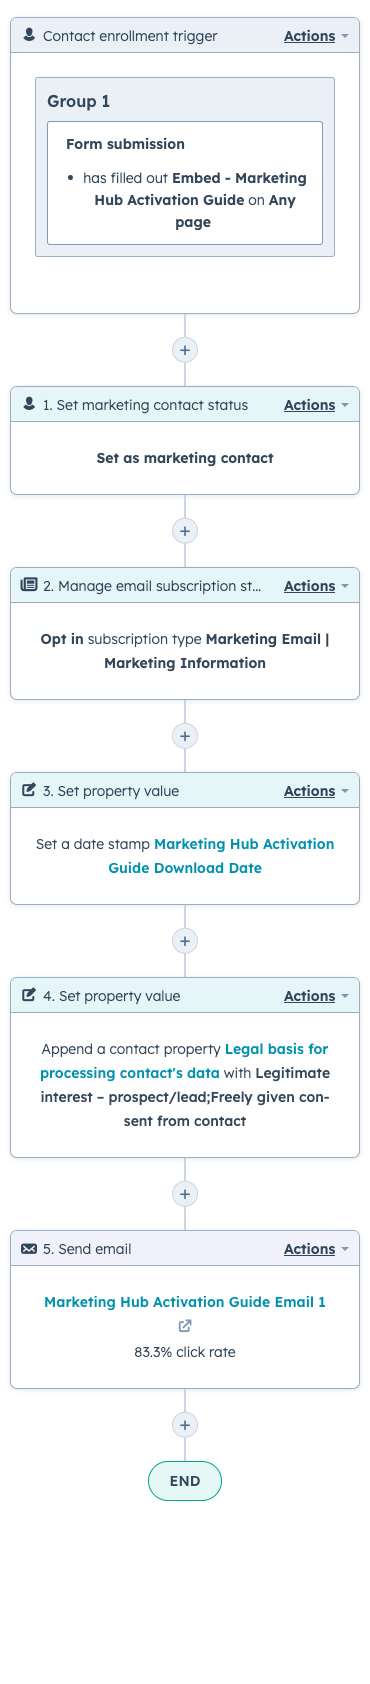 Workflow Screenshot - Downloaded Marketing Hub Activation Guide